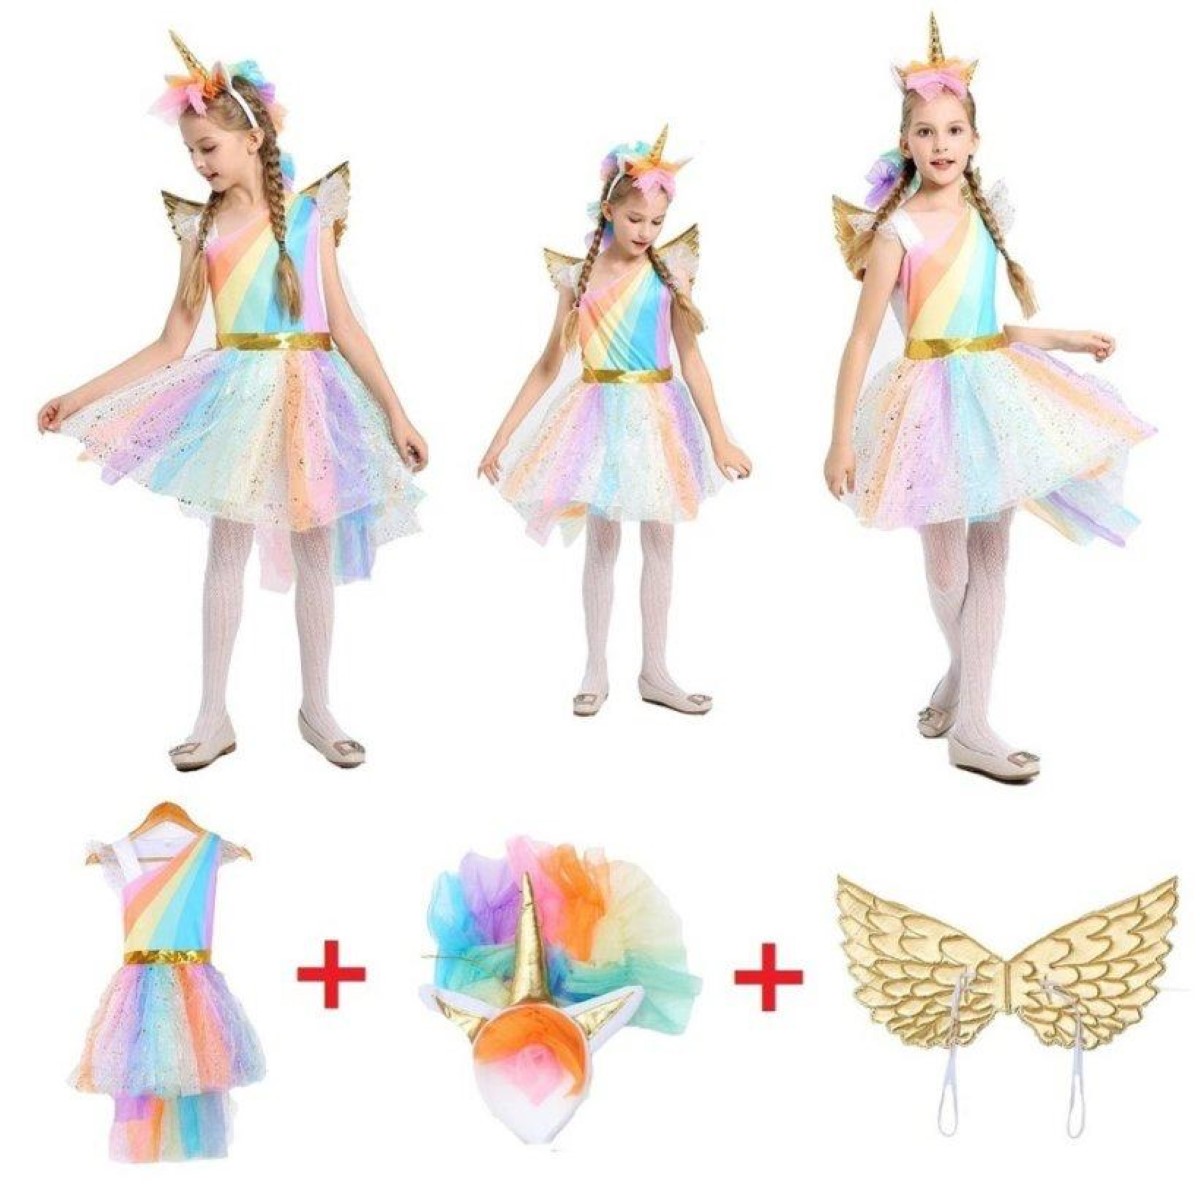 Pikkaboo Rainbow Unicorn Dress - Large